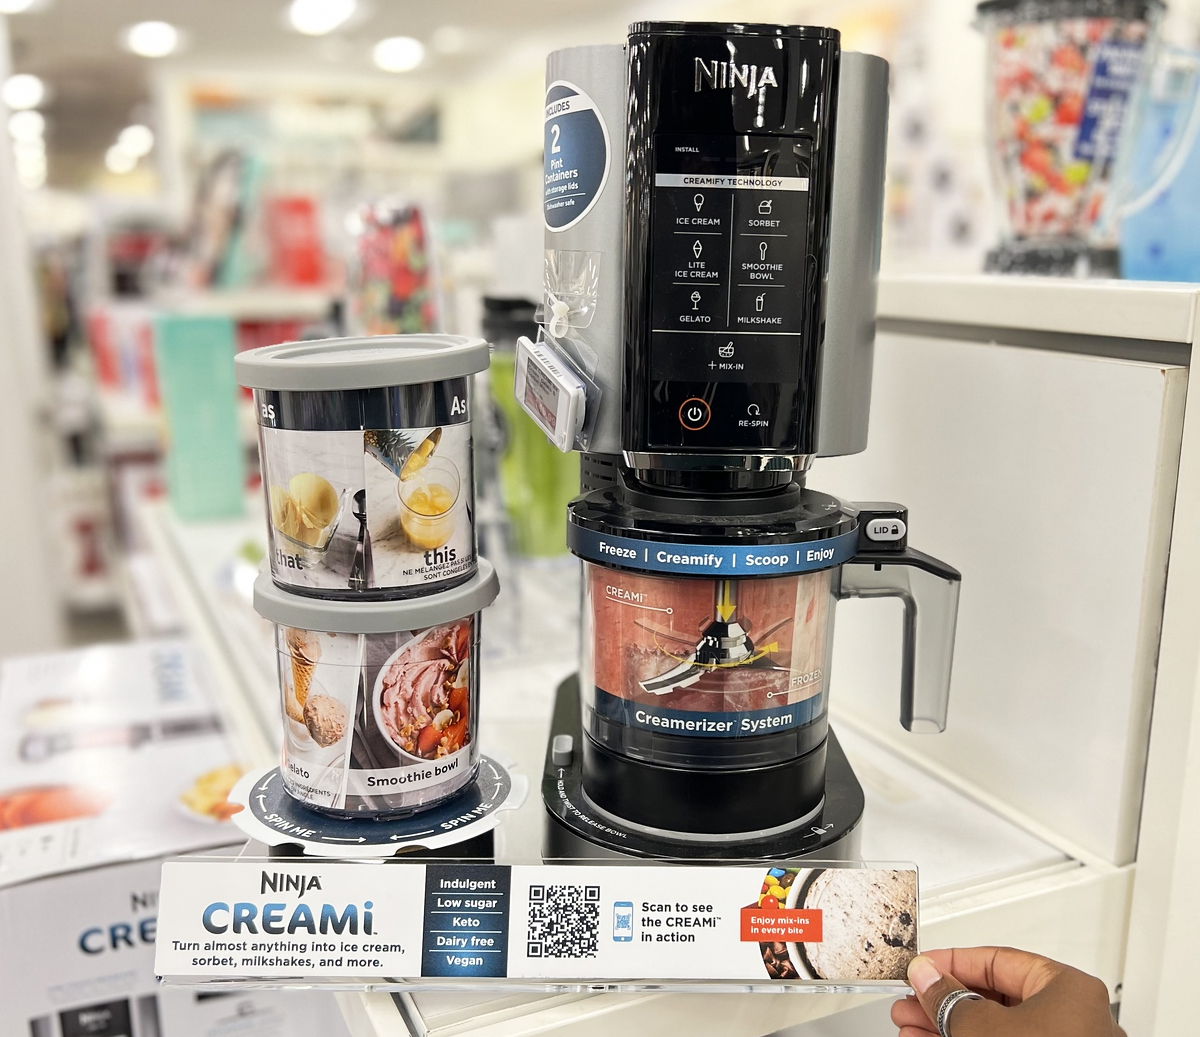 ninja creami ice cream maker on display in store